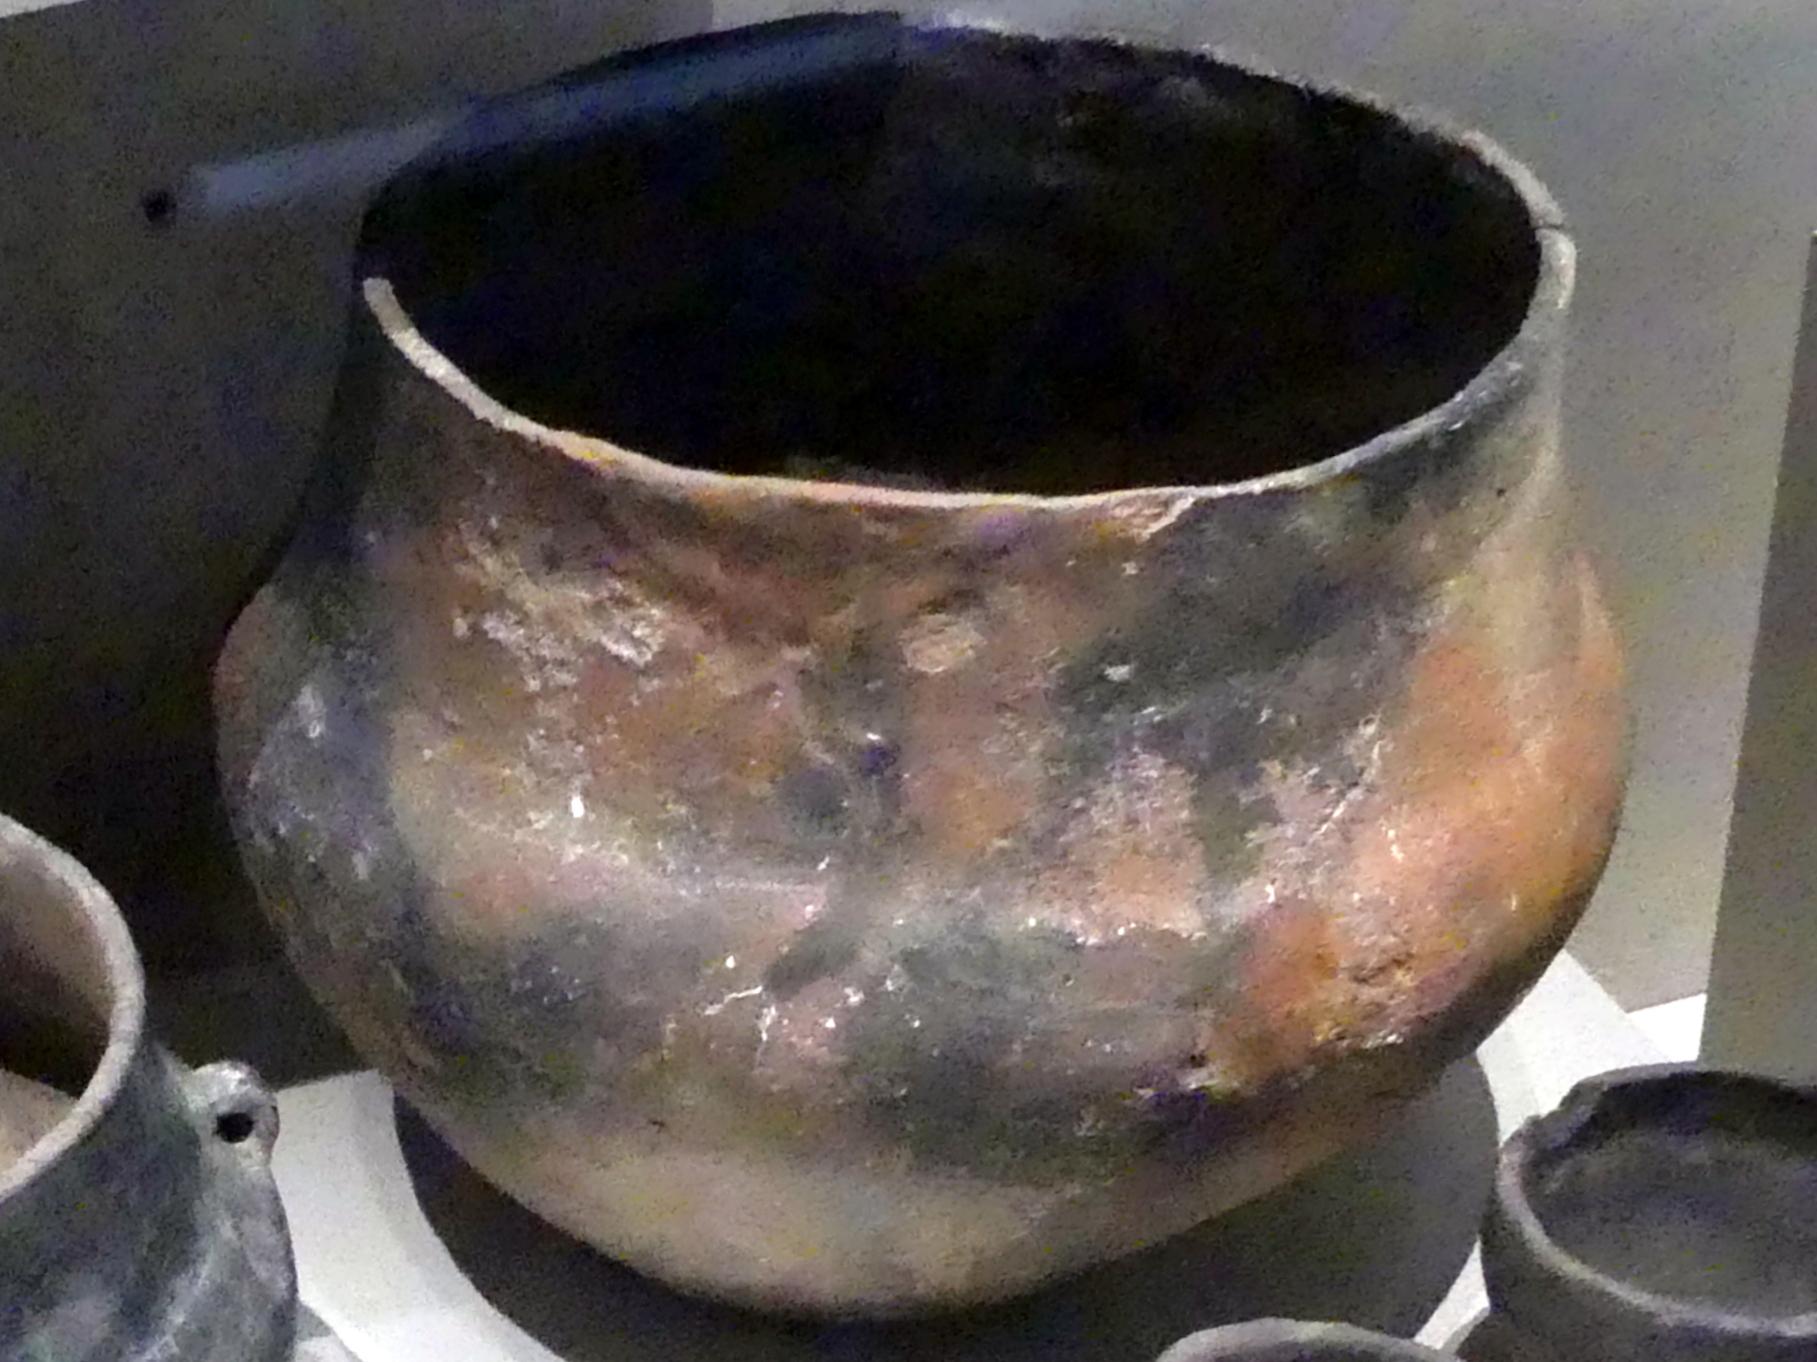 Topf, Nordische Bronzezeit, 1200 - 700 v. Chr., 1100 - 800 v. Chr., Bild 1/2